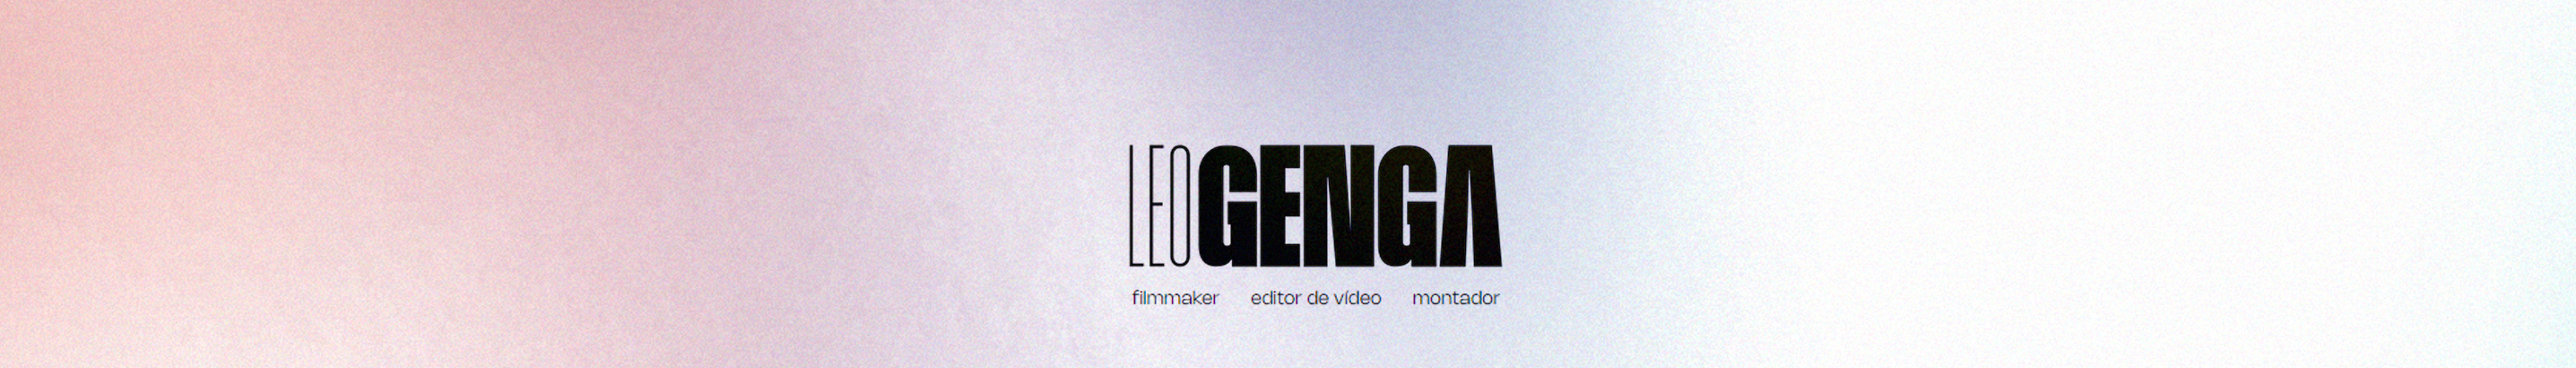 Leonardo Genga's profile banner